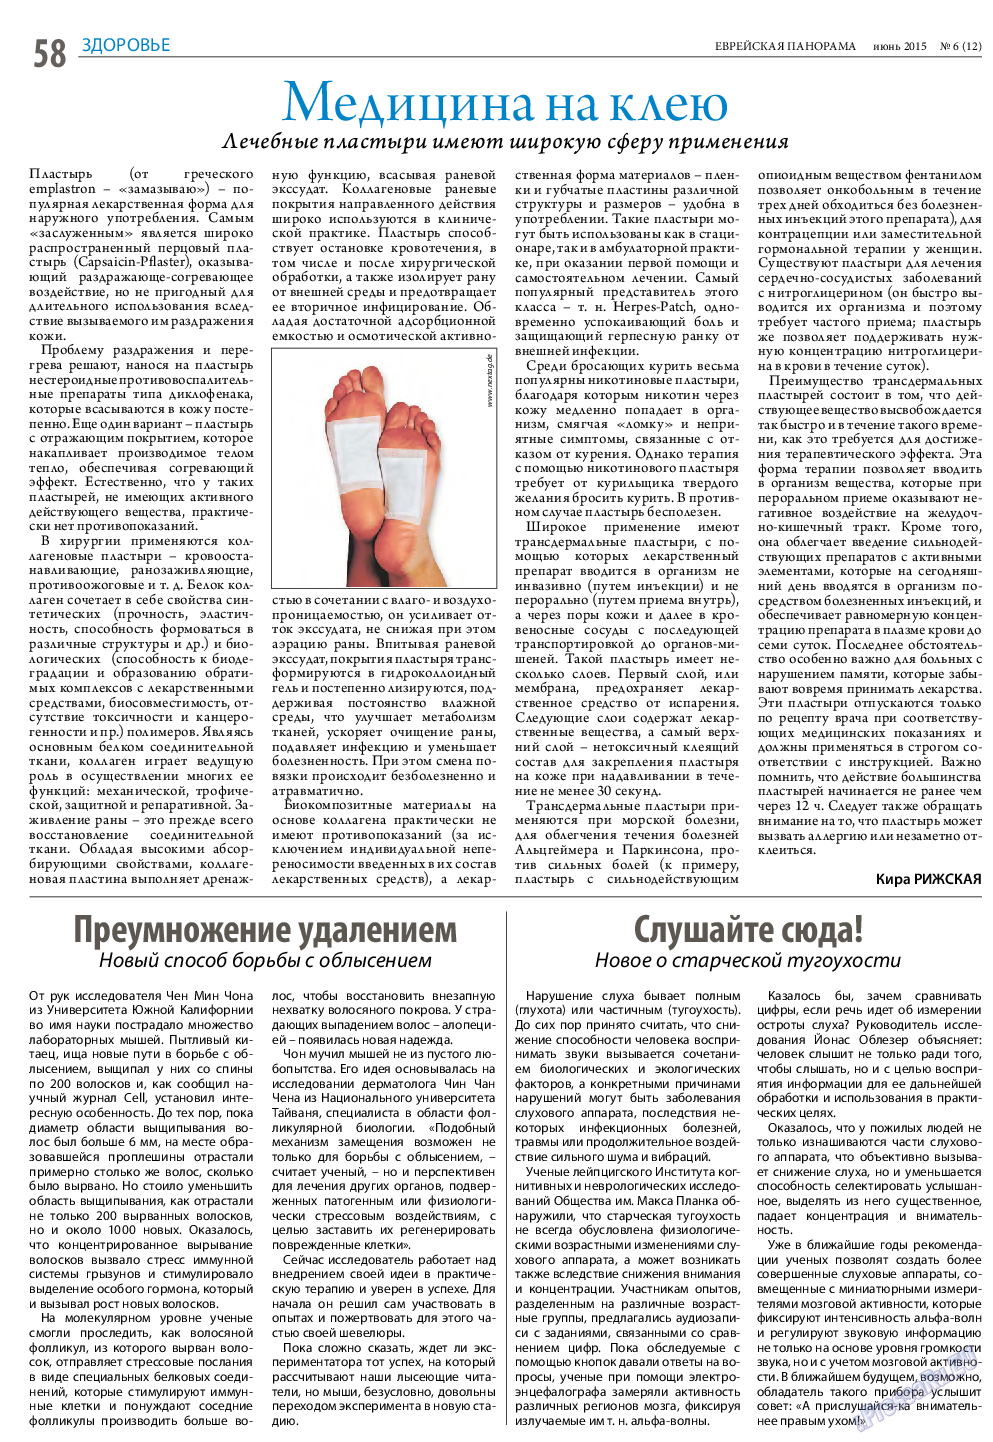 Еврейская панорама, газета. 2015 №6 стр.58